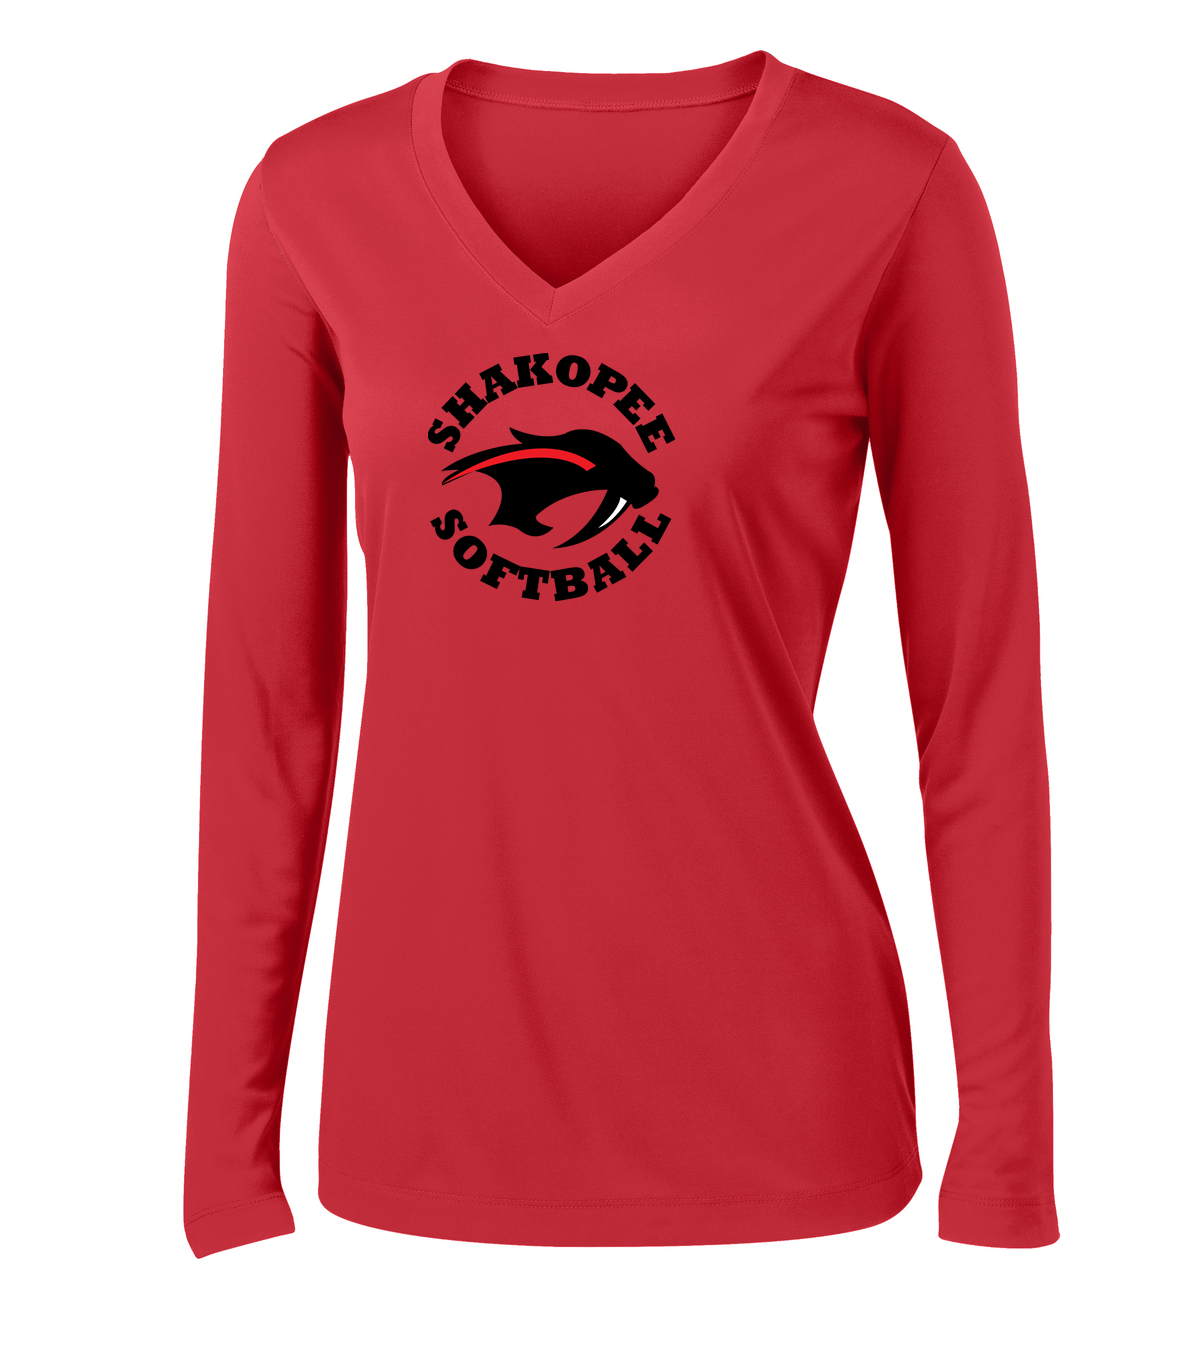 Shakopee Softball Women's Long Sleeve Performance Shirt